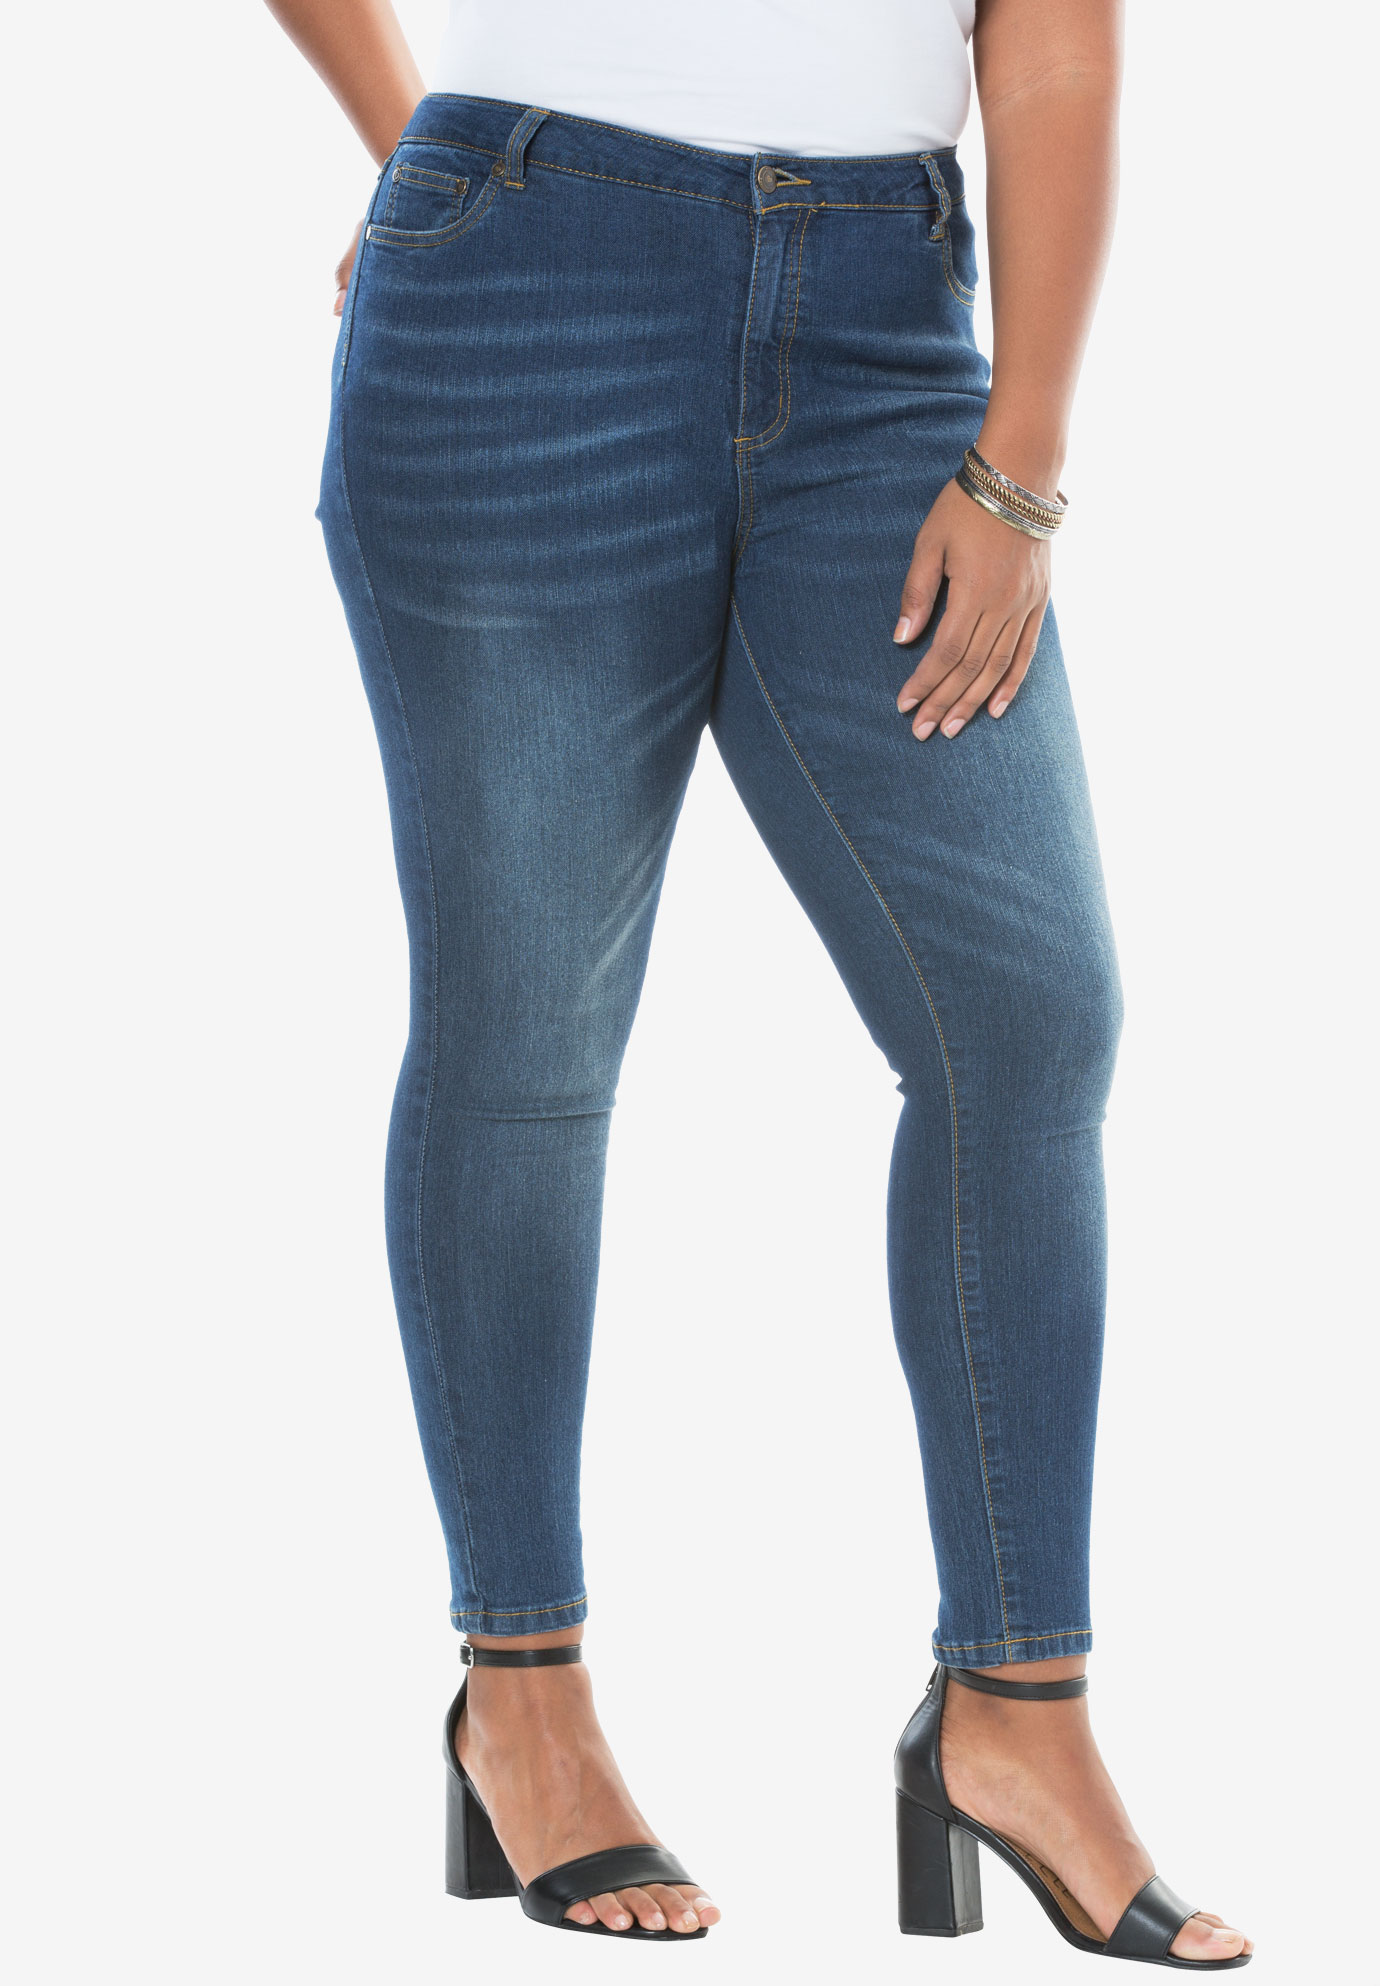 Skinny Jean By Denim 24 7® Plus Size Jeans Roaman S